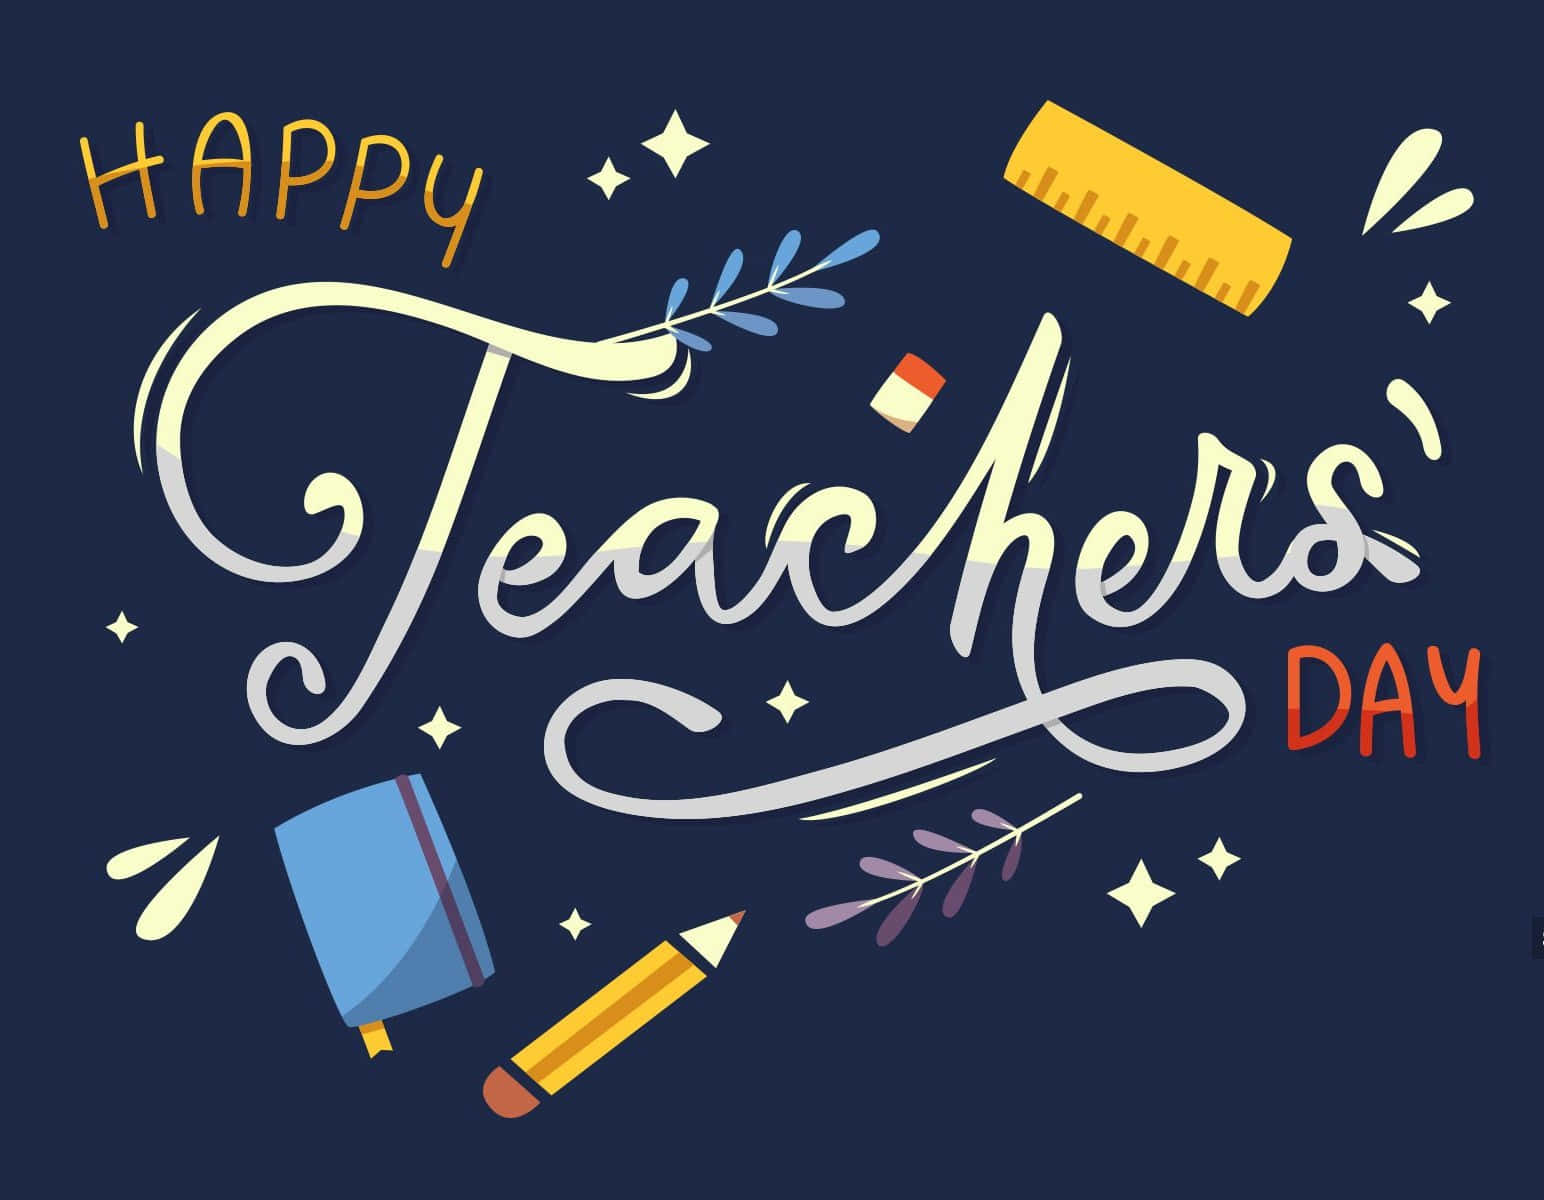 Show your appreciation for teachers on the International Teachers Day